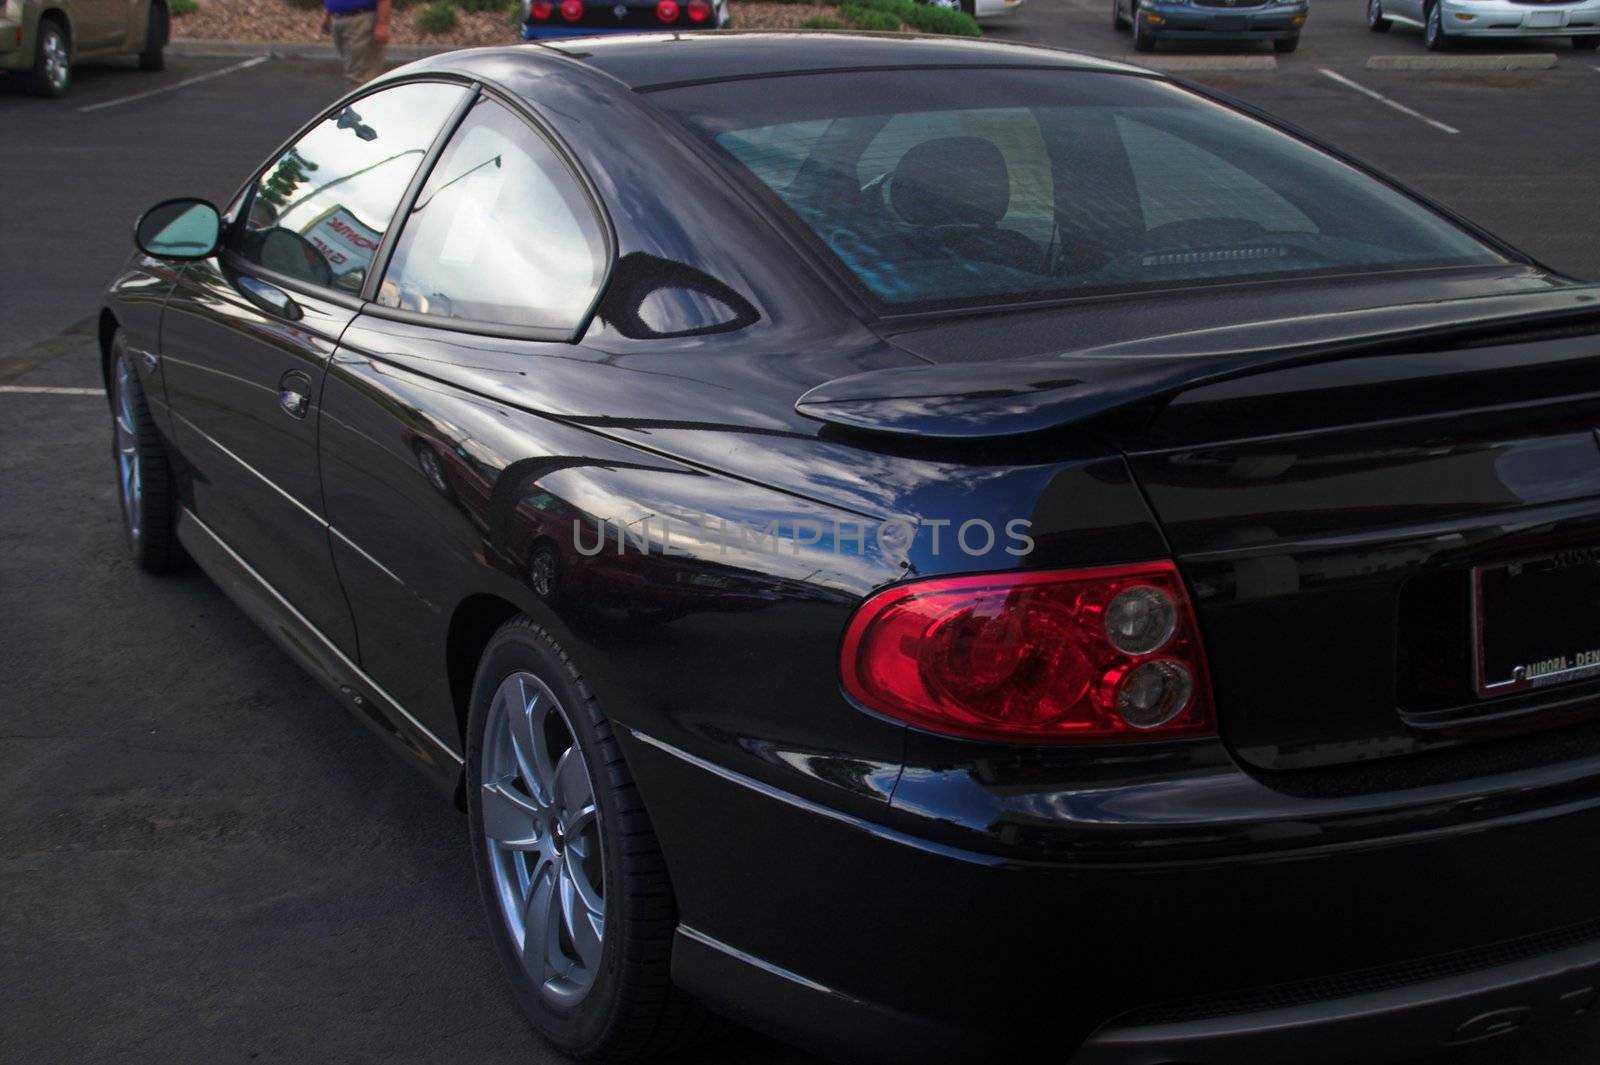 New Black Pontiac GTO by jdebordphoto